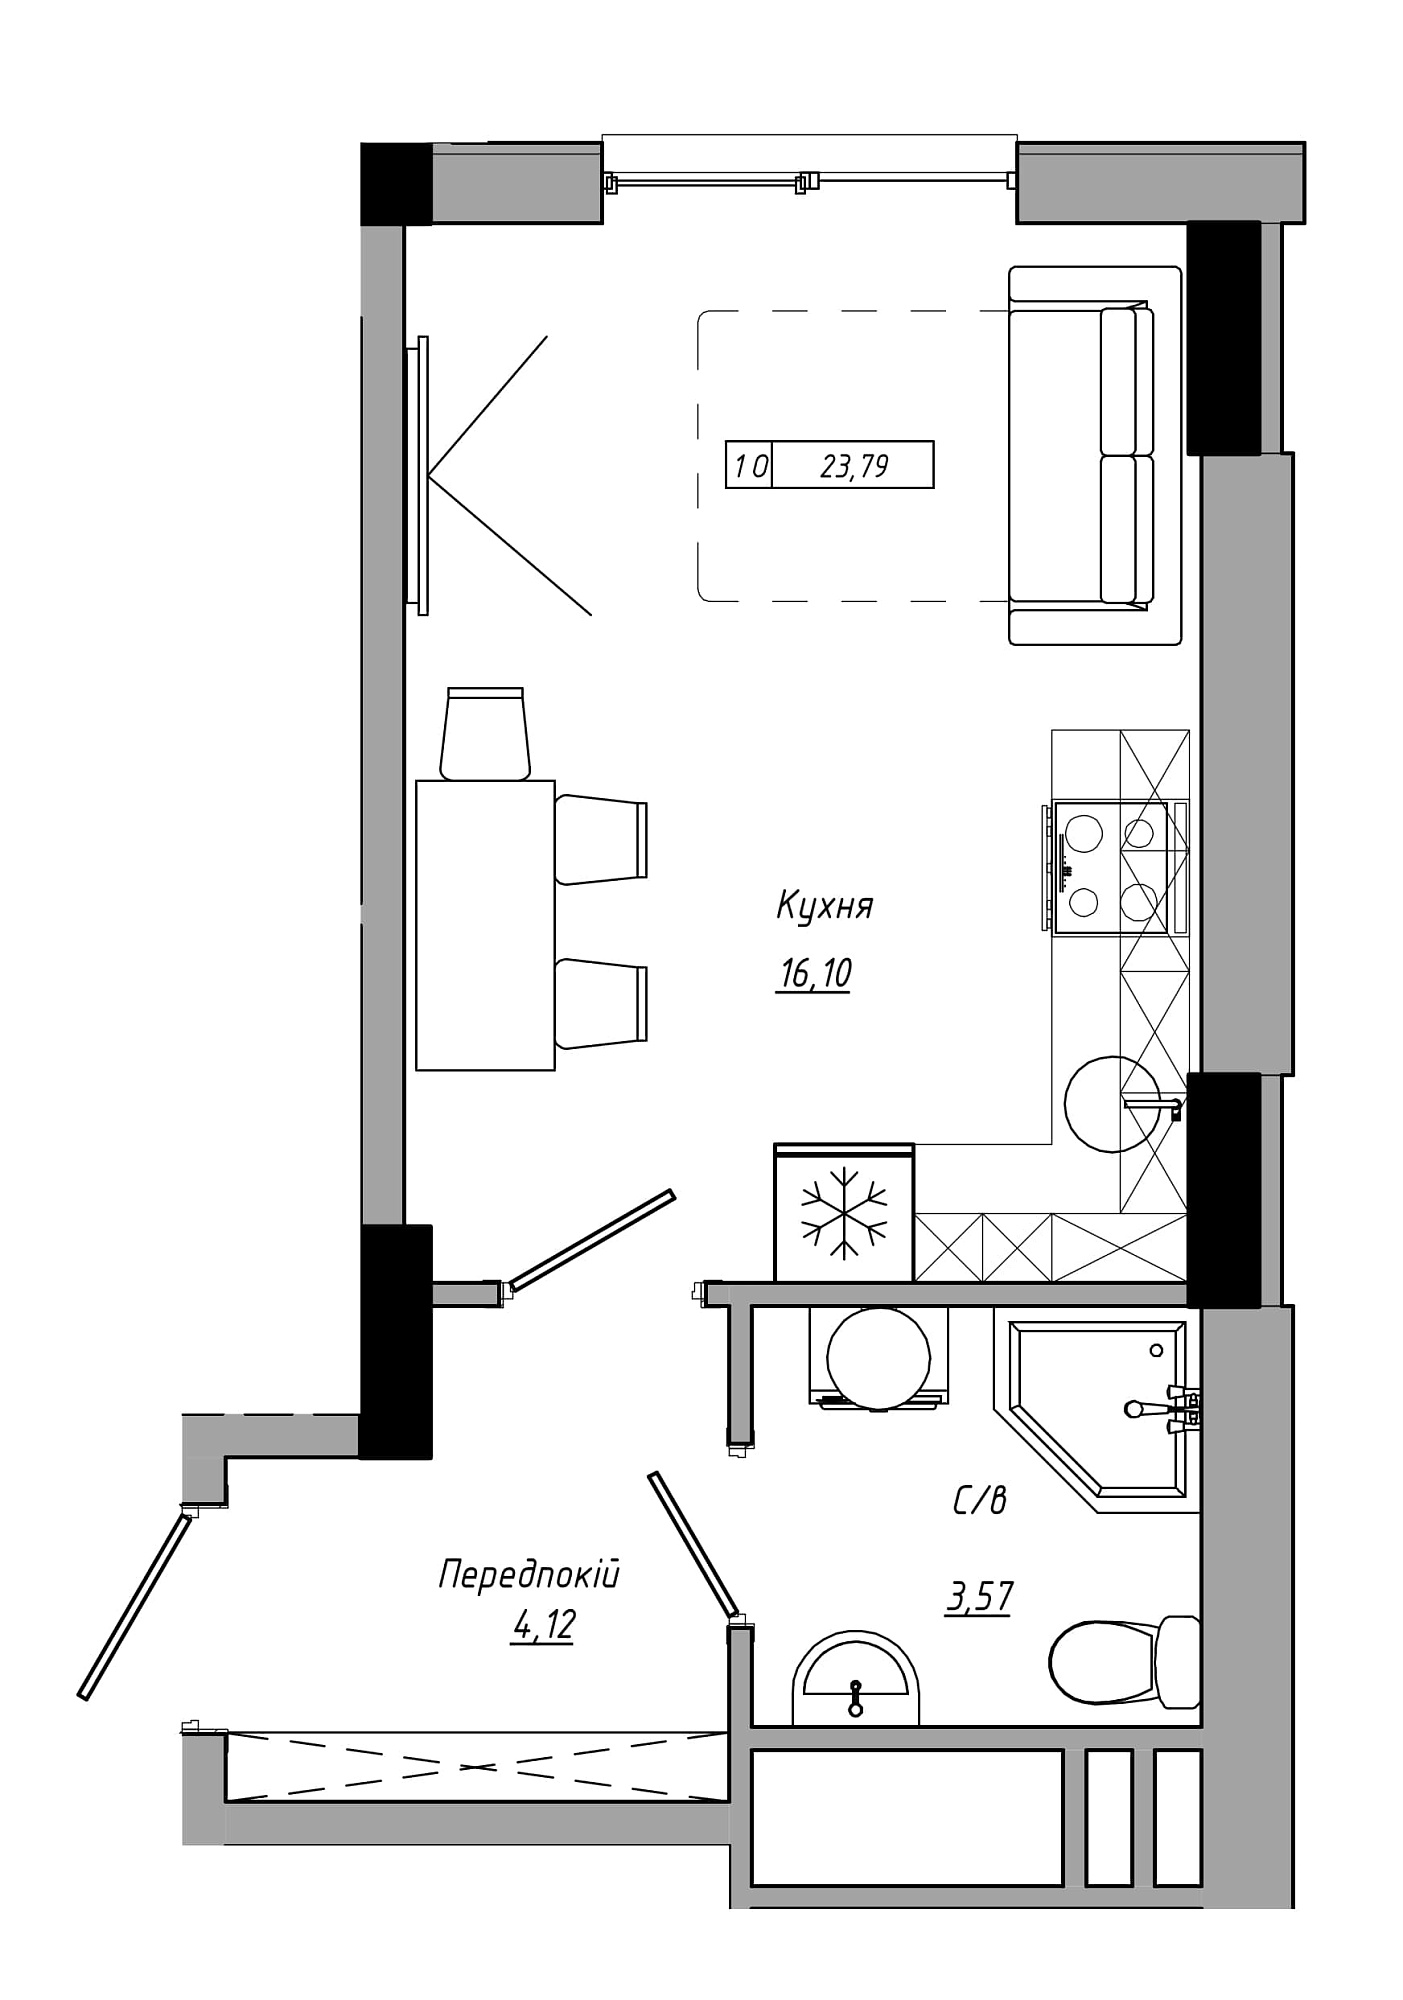 Planning Smart flats area 23.79m2, AB-21-11/00017.